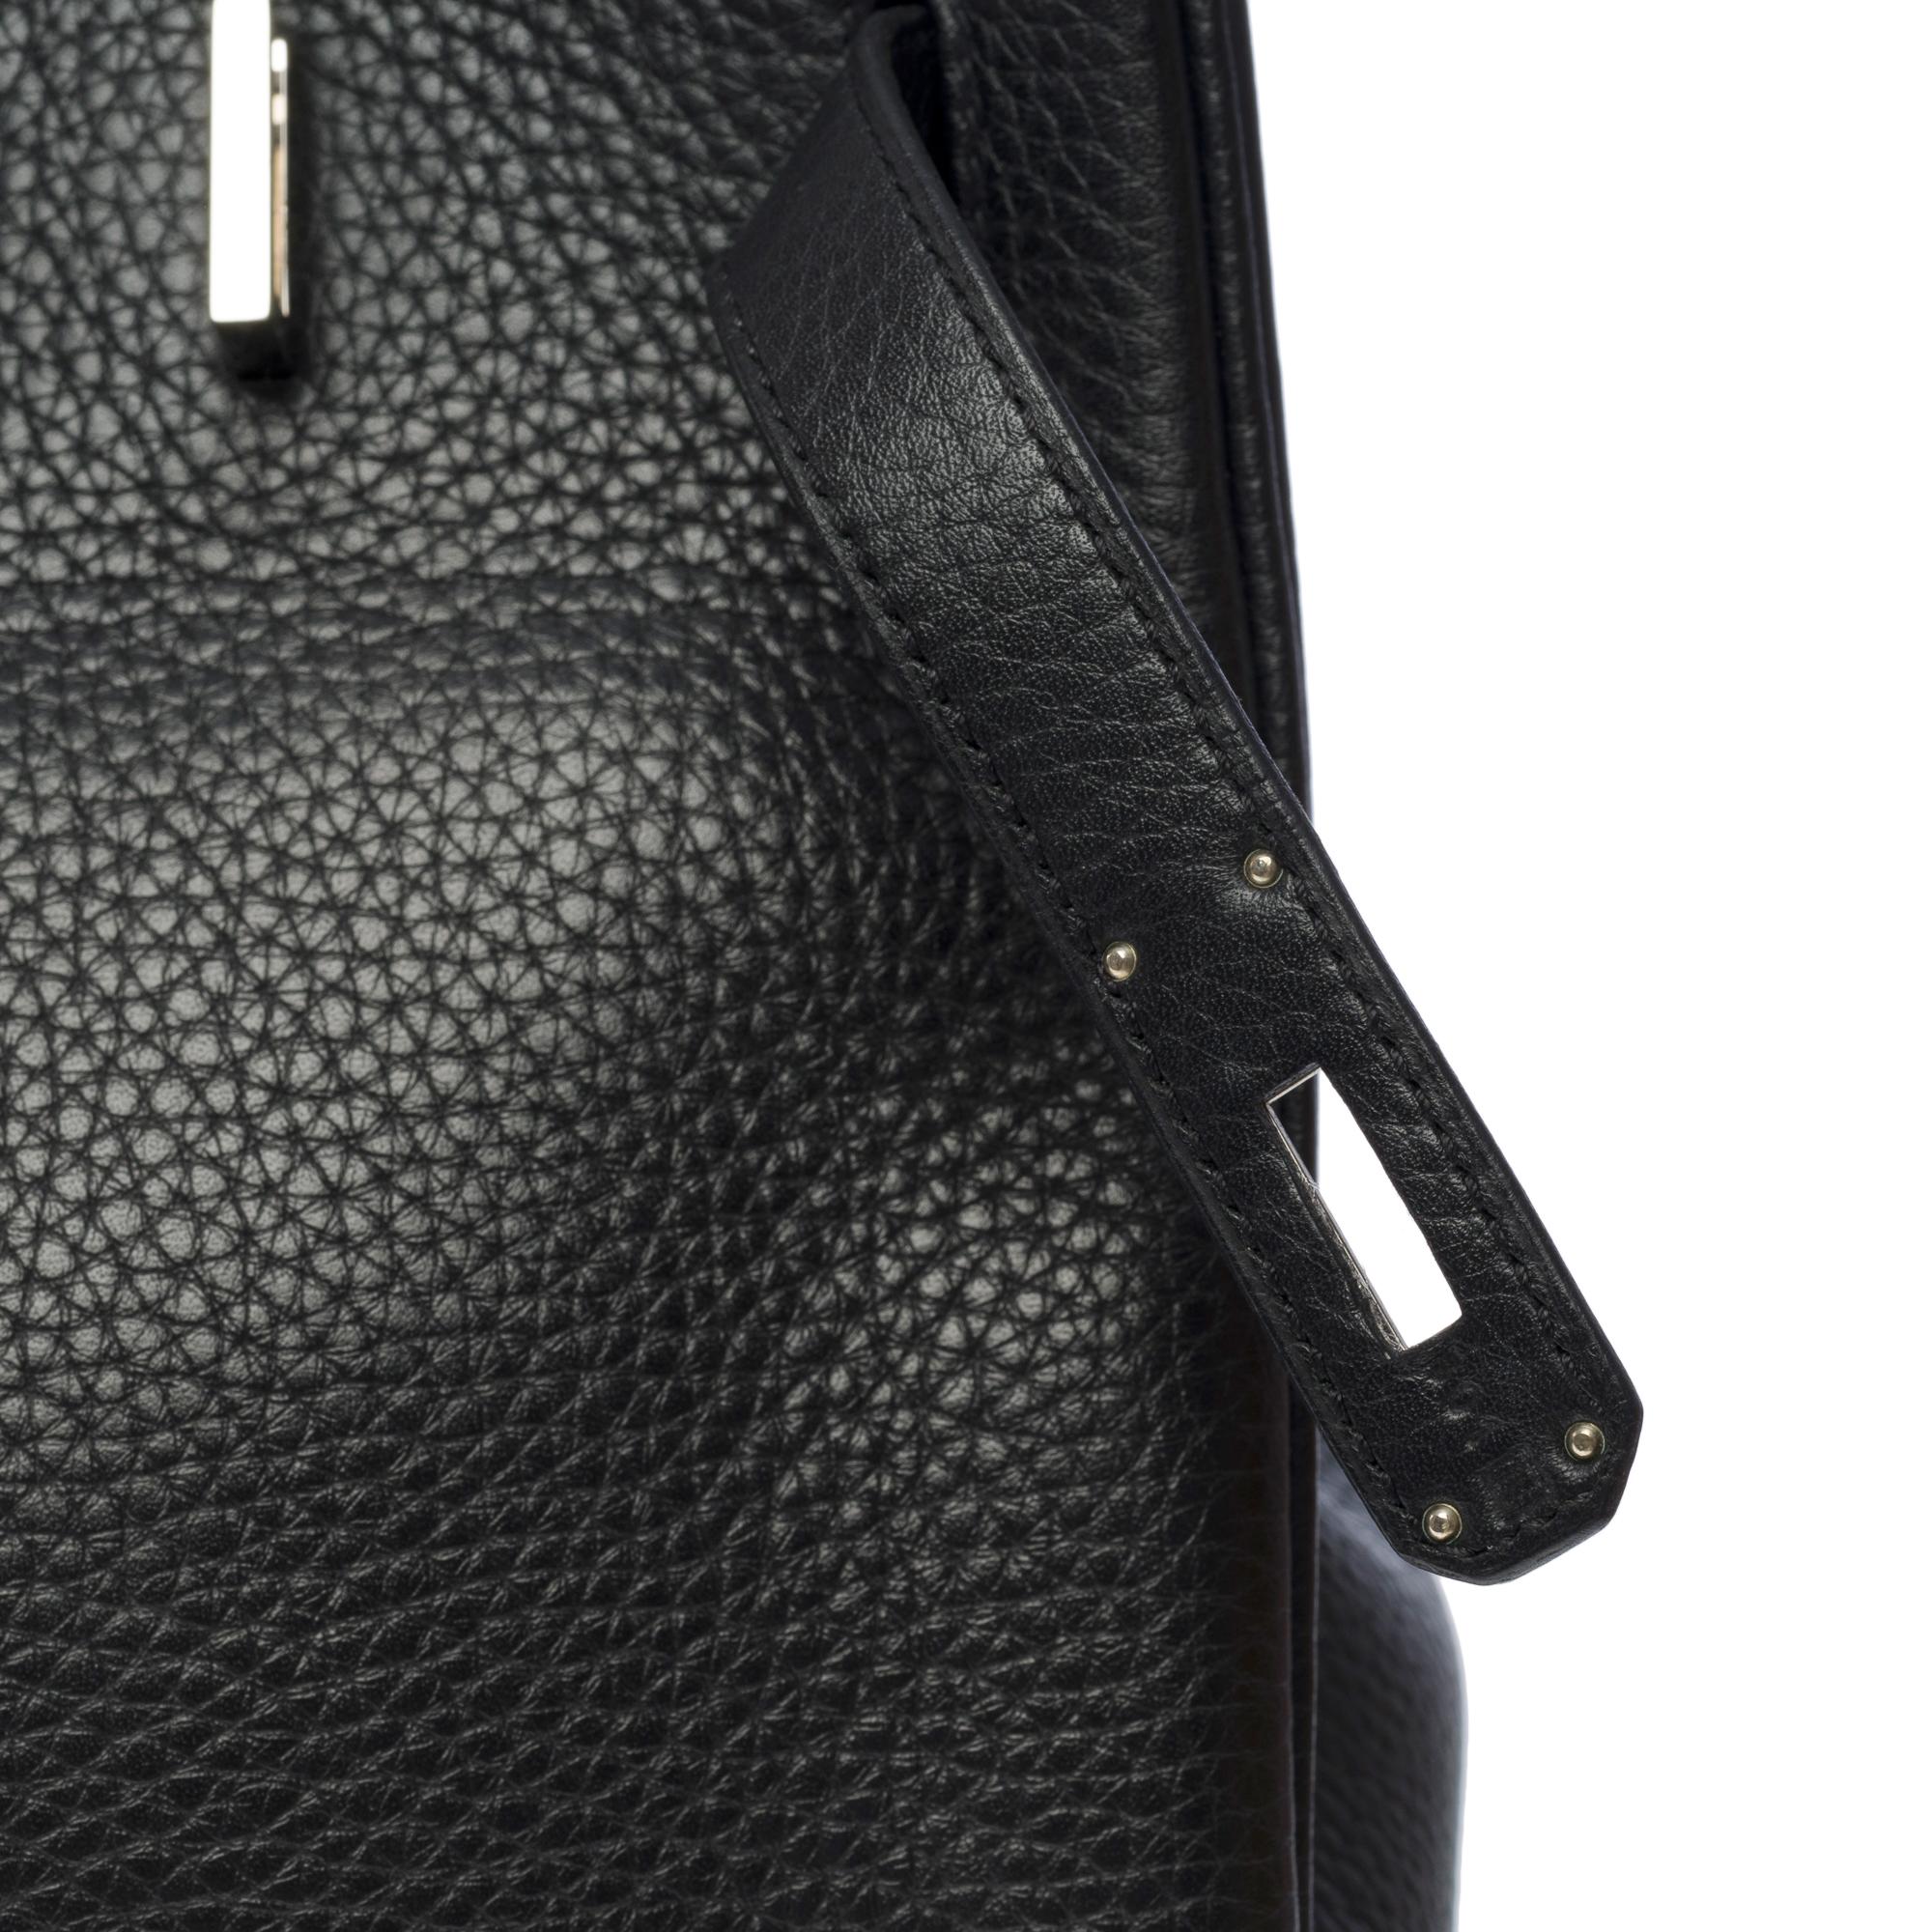 Amazing Hermès Birkin 35 handbag in black Togo leather, SHW 3